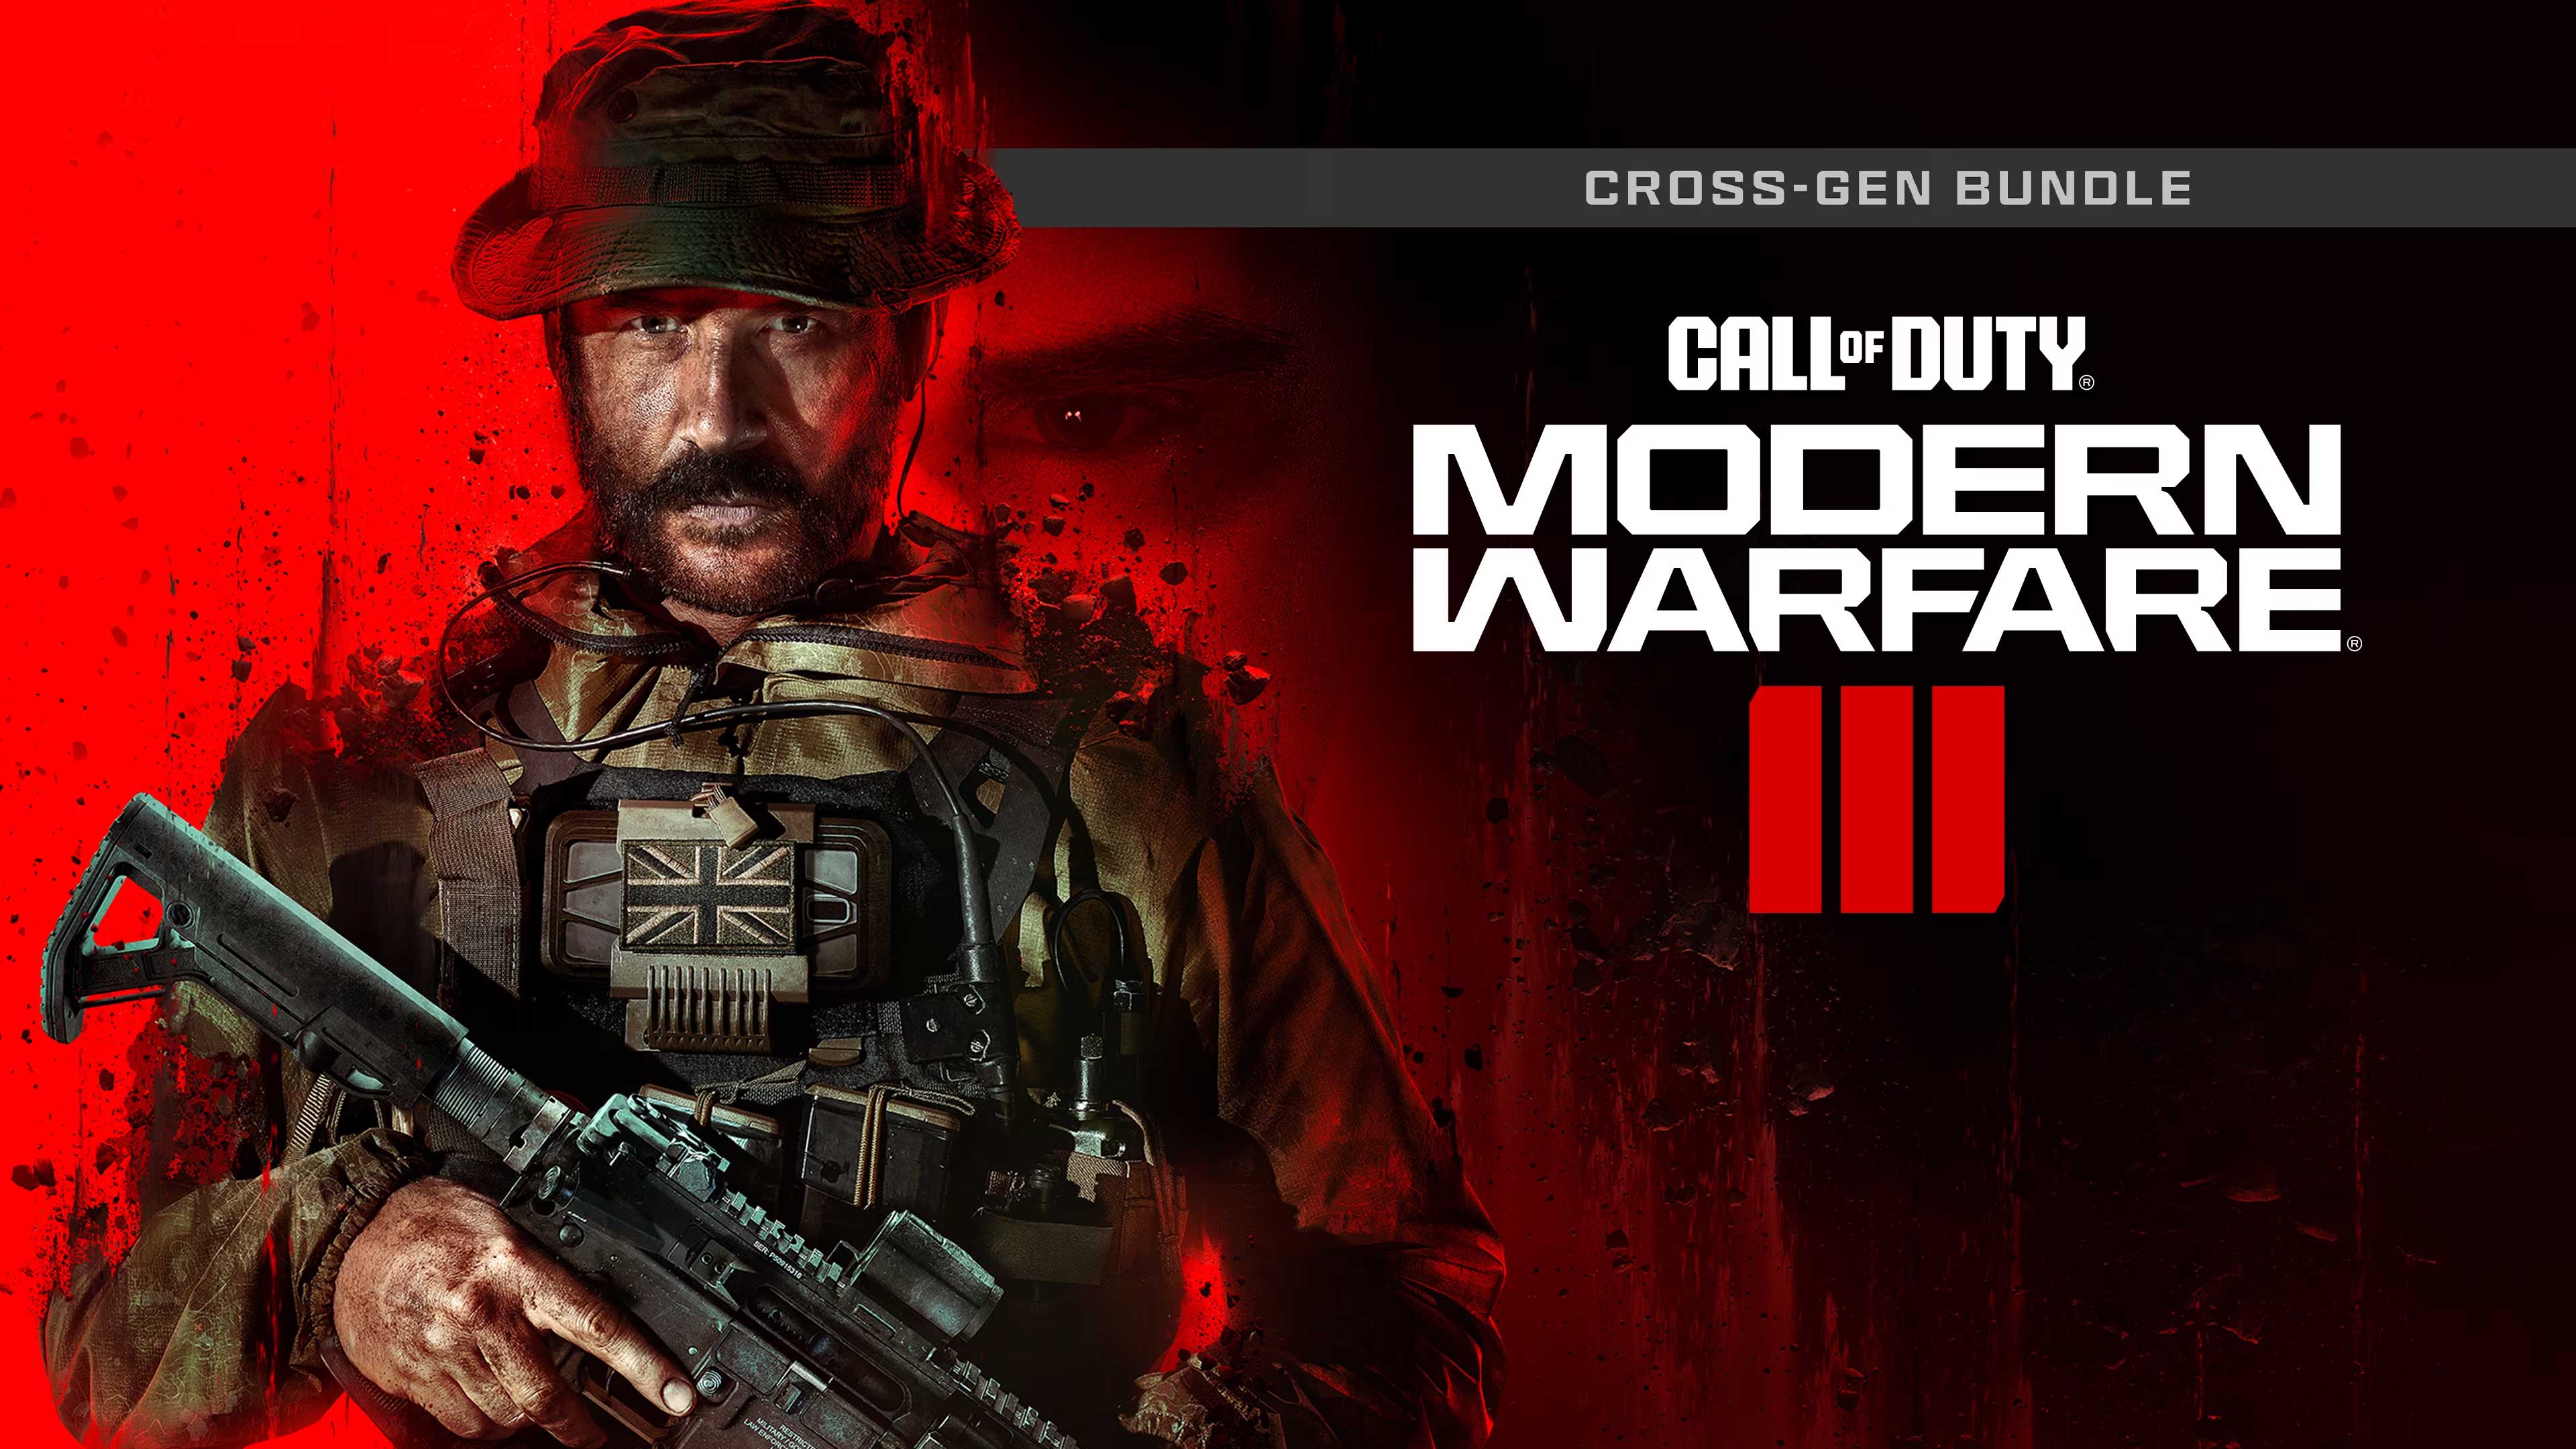 Call of Duty: Modern Warfare III - Cross-Gen Bundle, The Gaming Habits, thegaminghabits.com